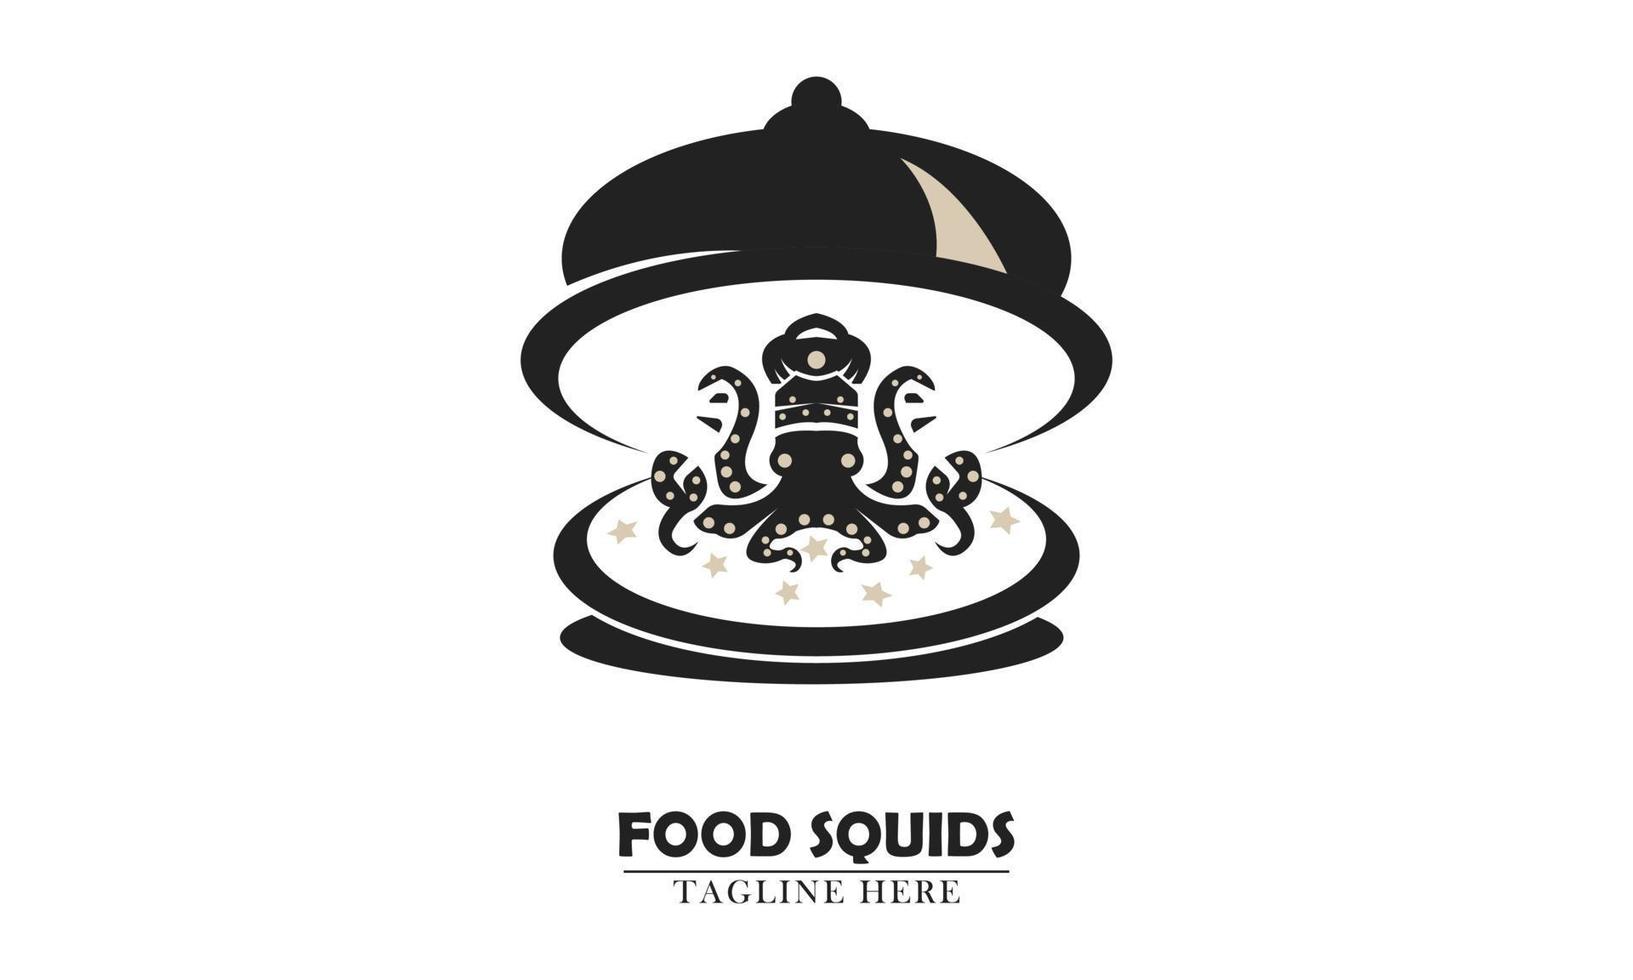 squid in food lid logo icon element vector